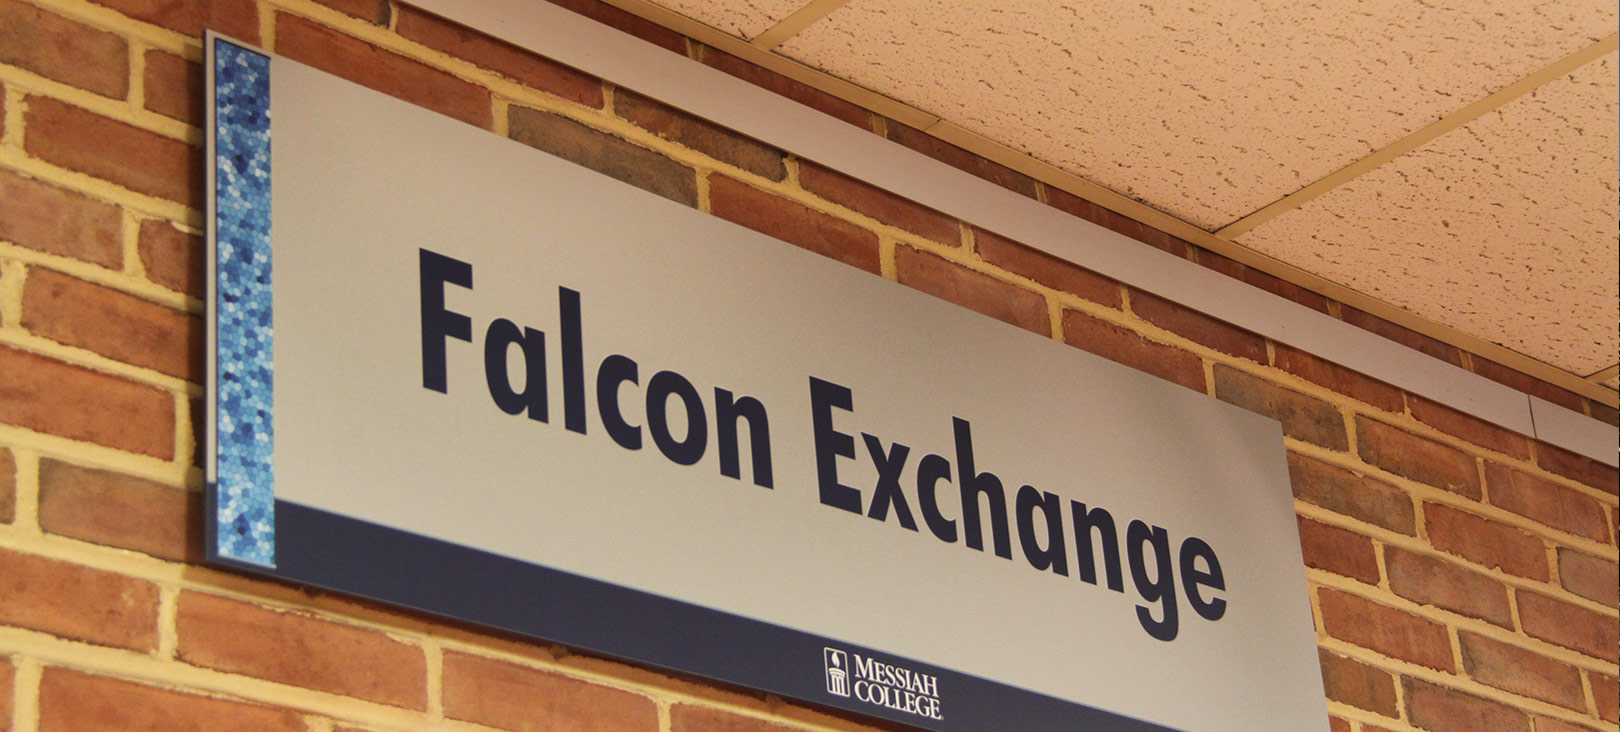 Falcon Exchange falconexchange.jpg